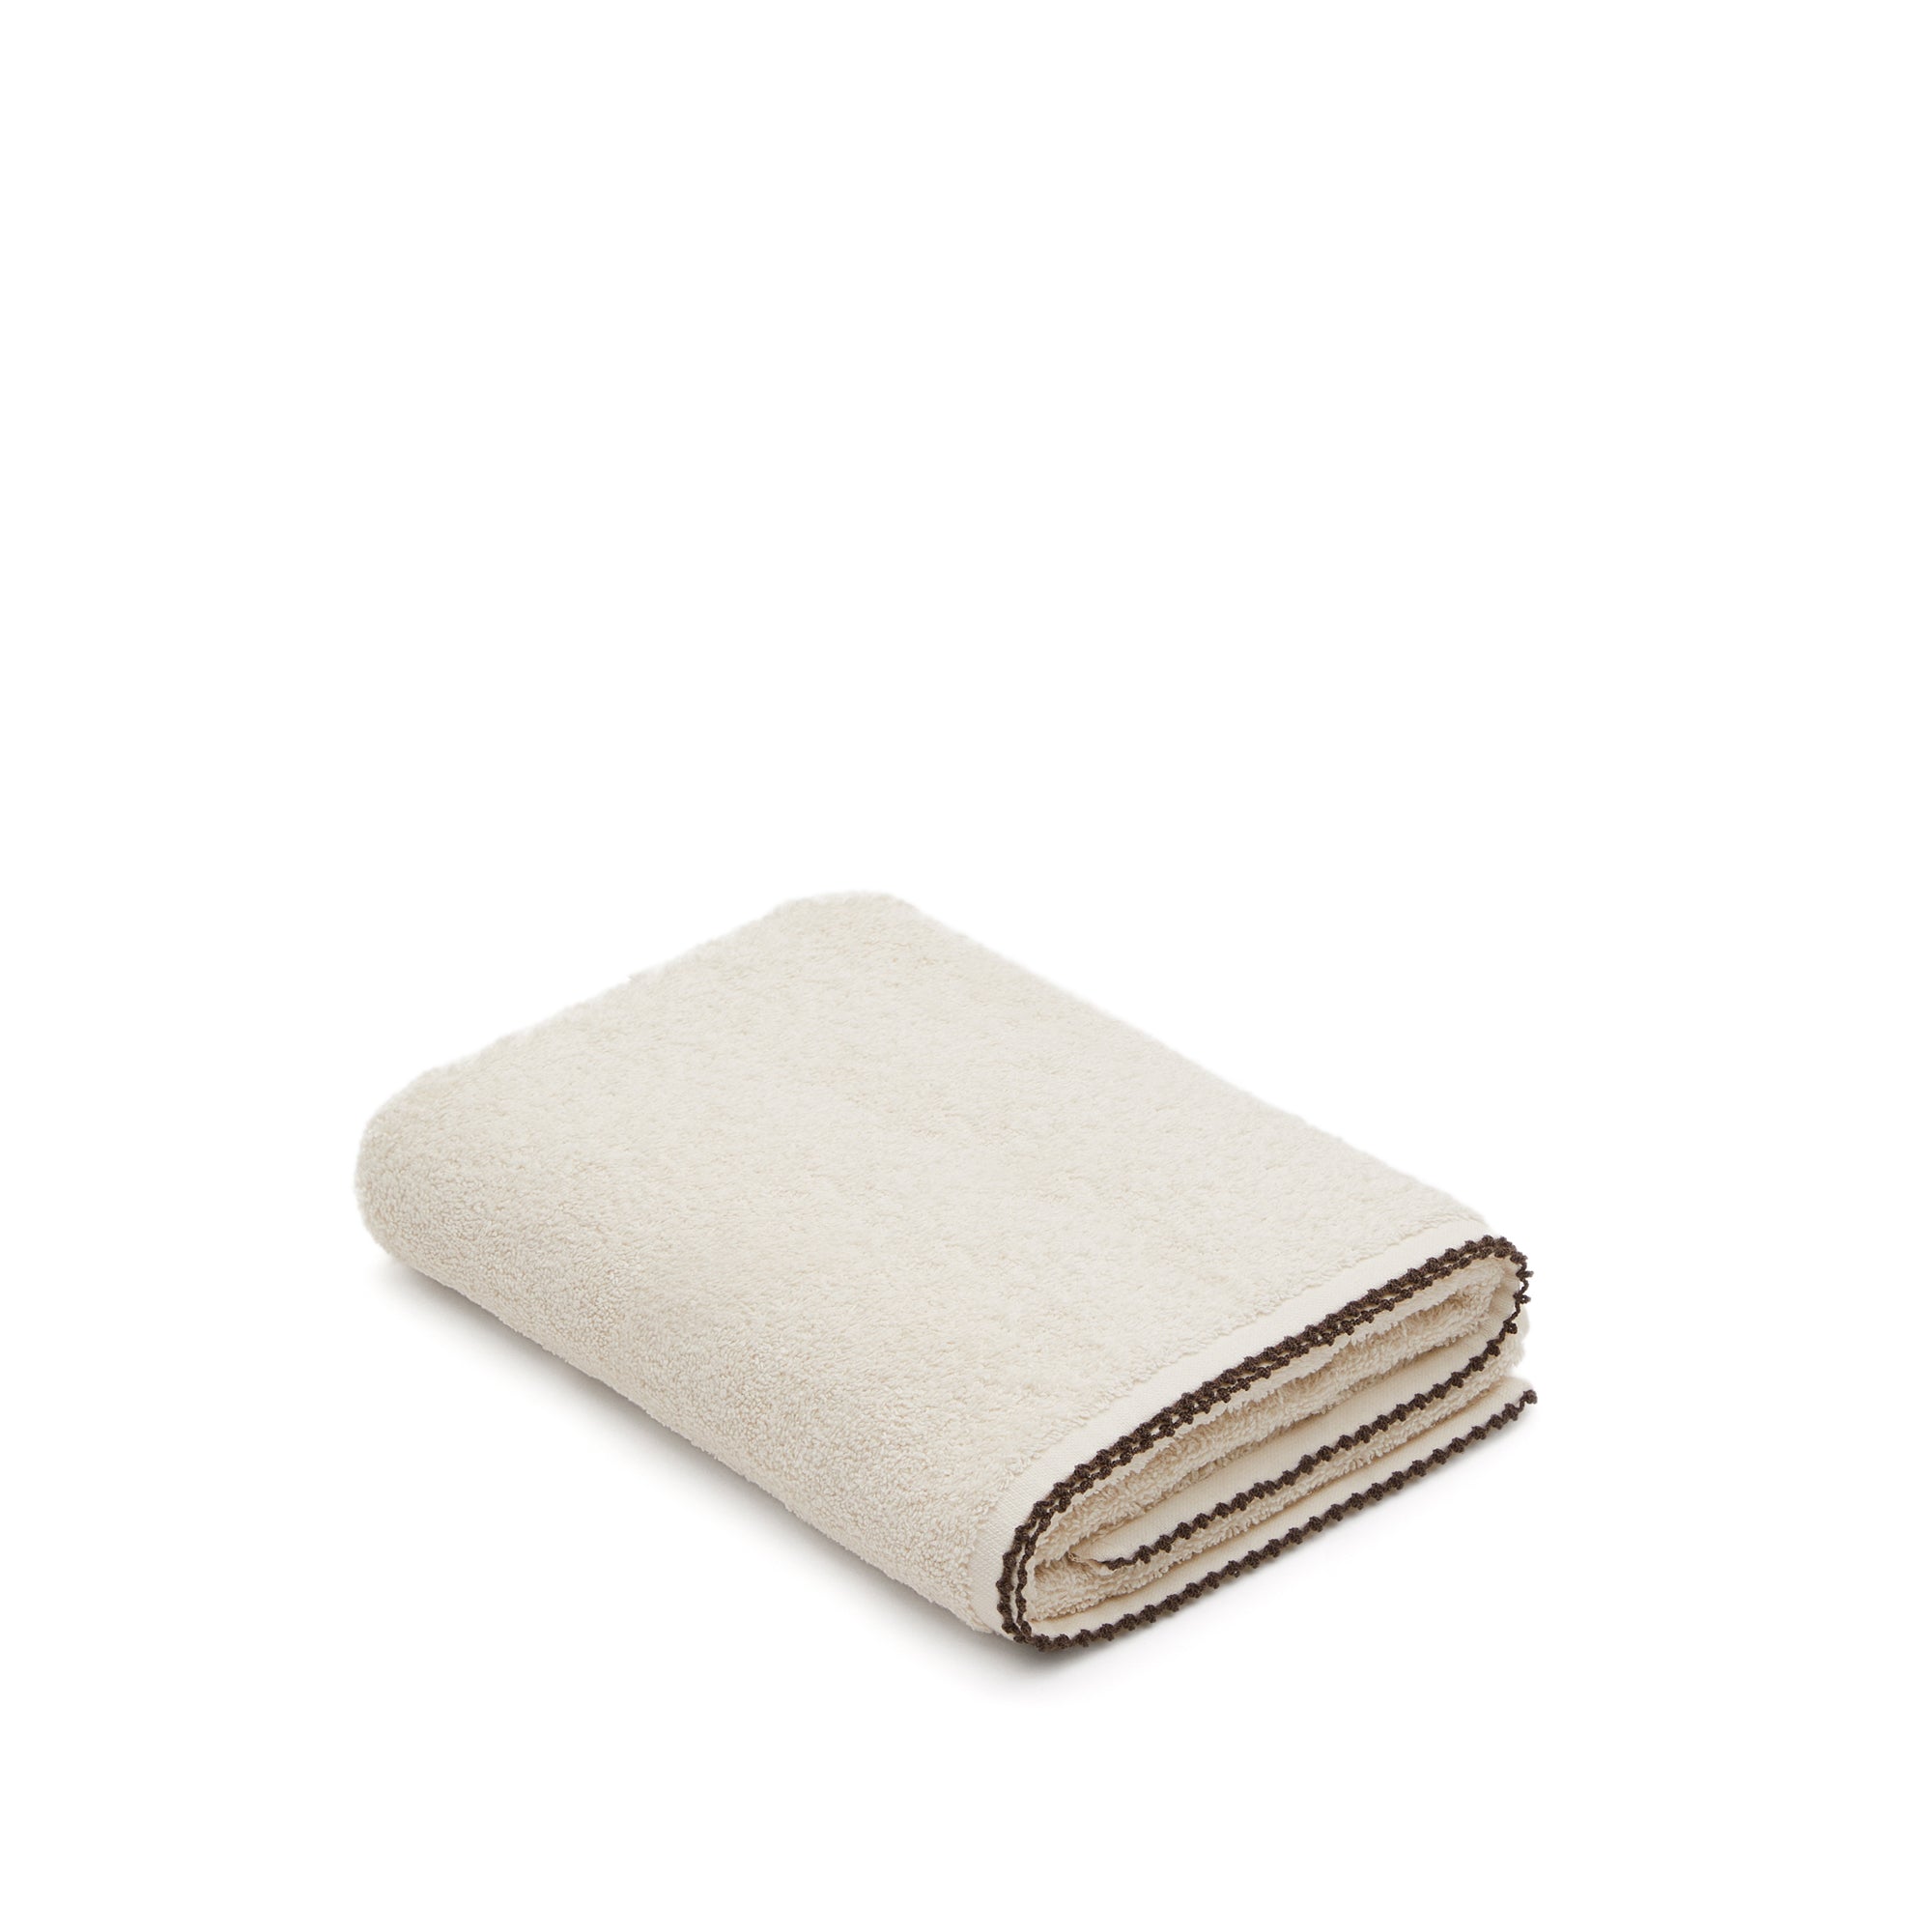 Sinami hand towel, 100% beige cotton, with contrasting black details, 50 x 90 cm